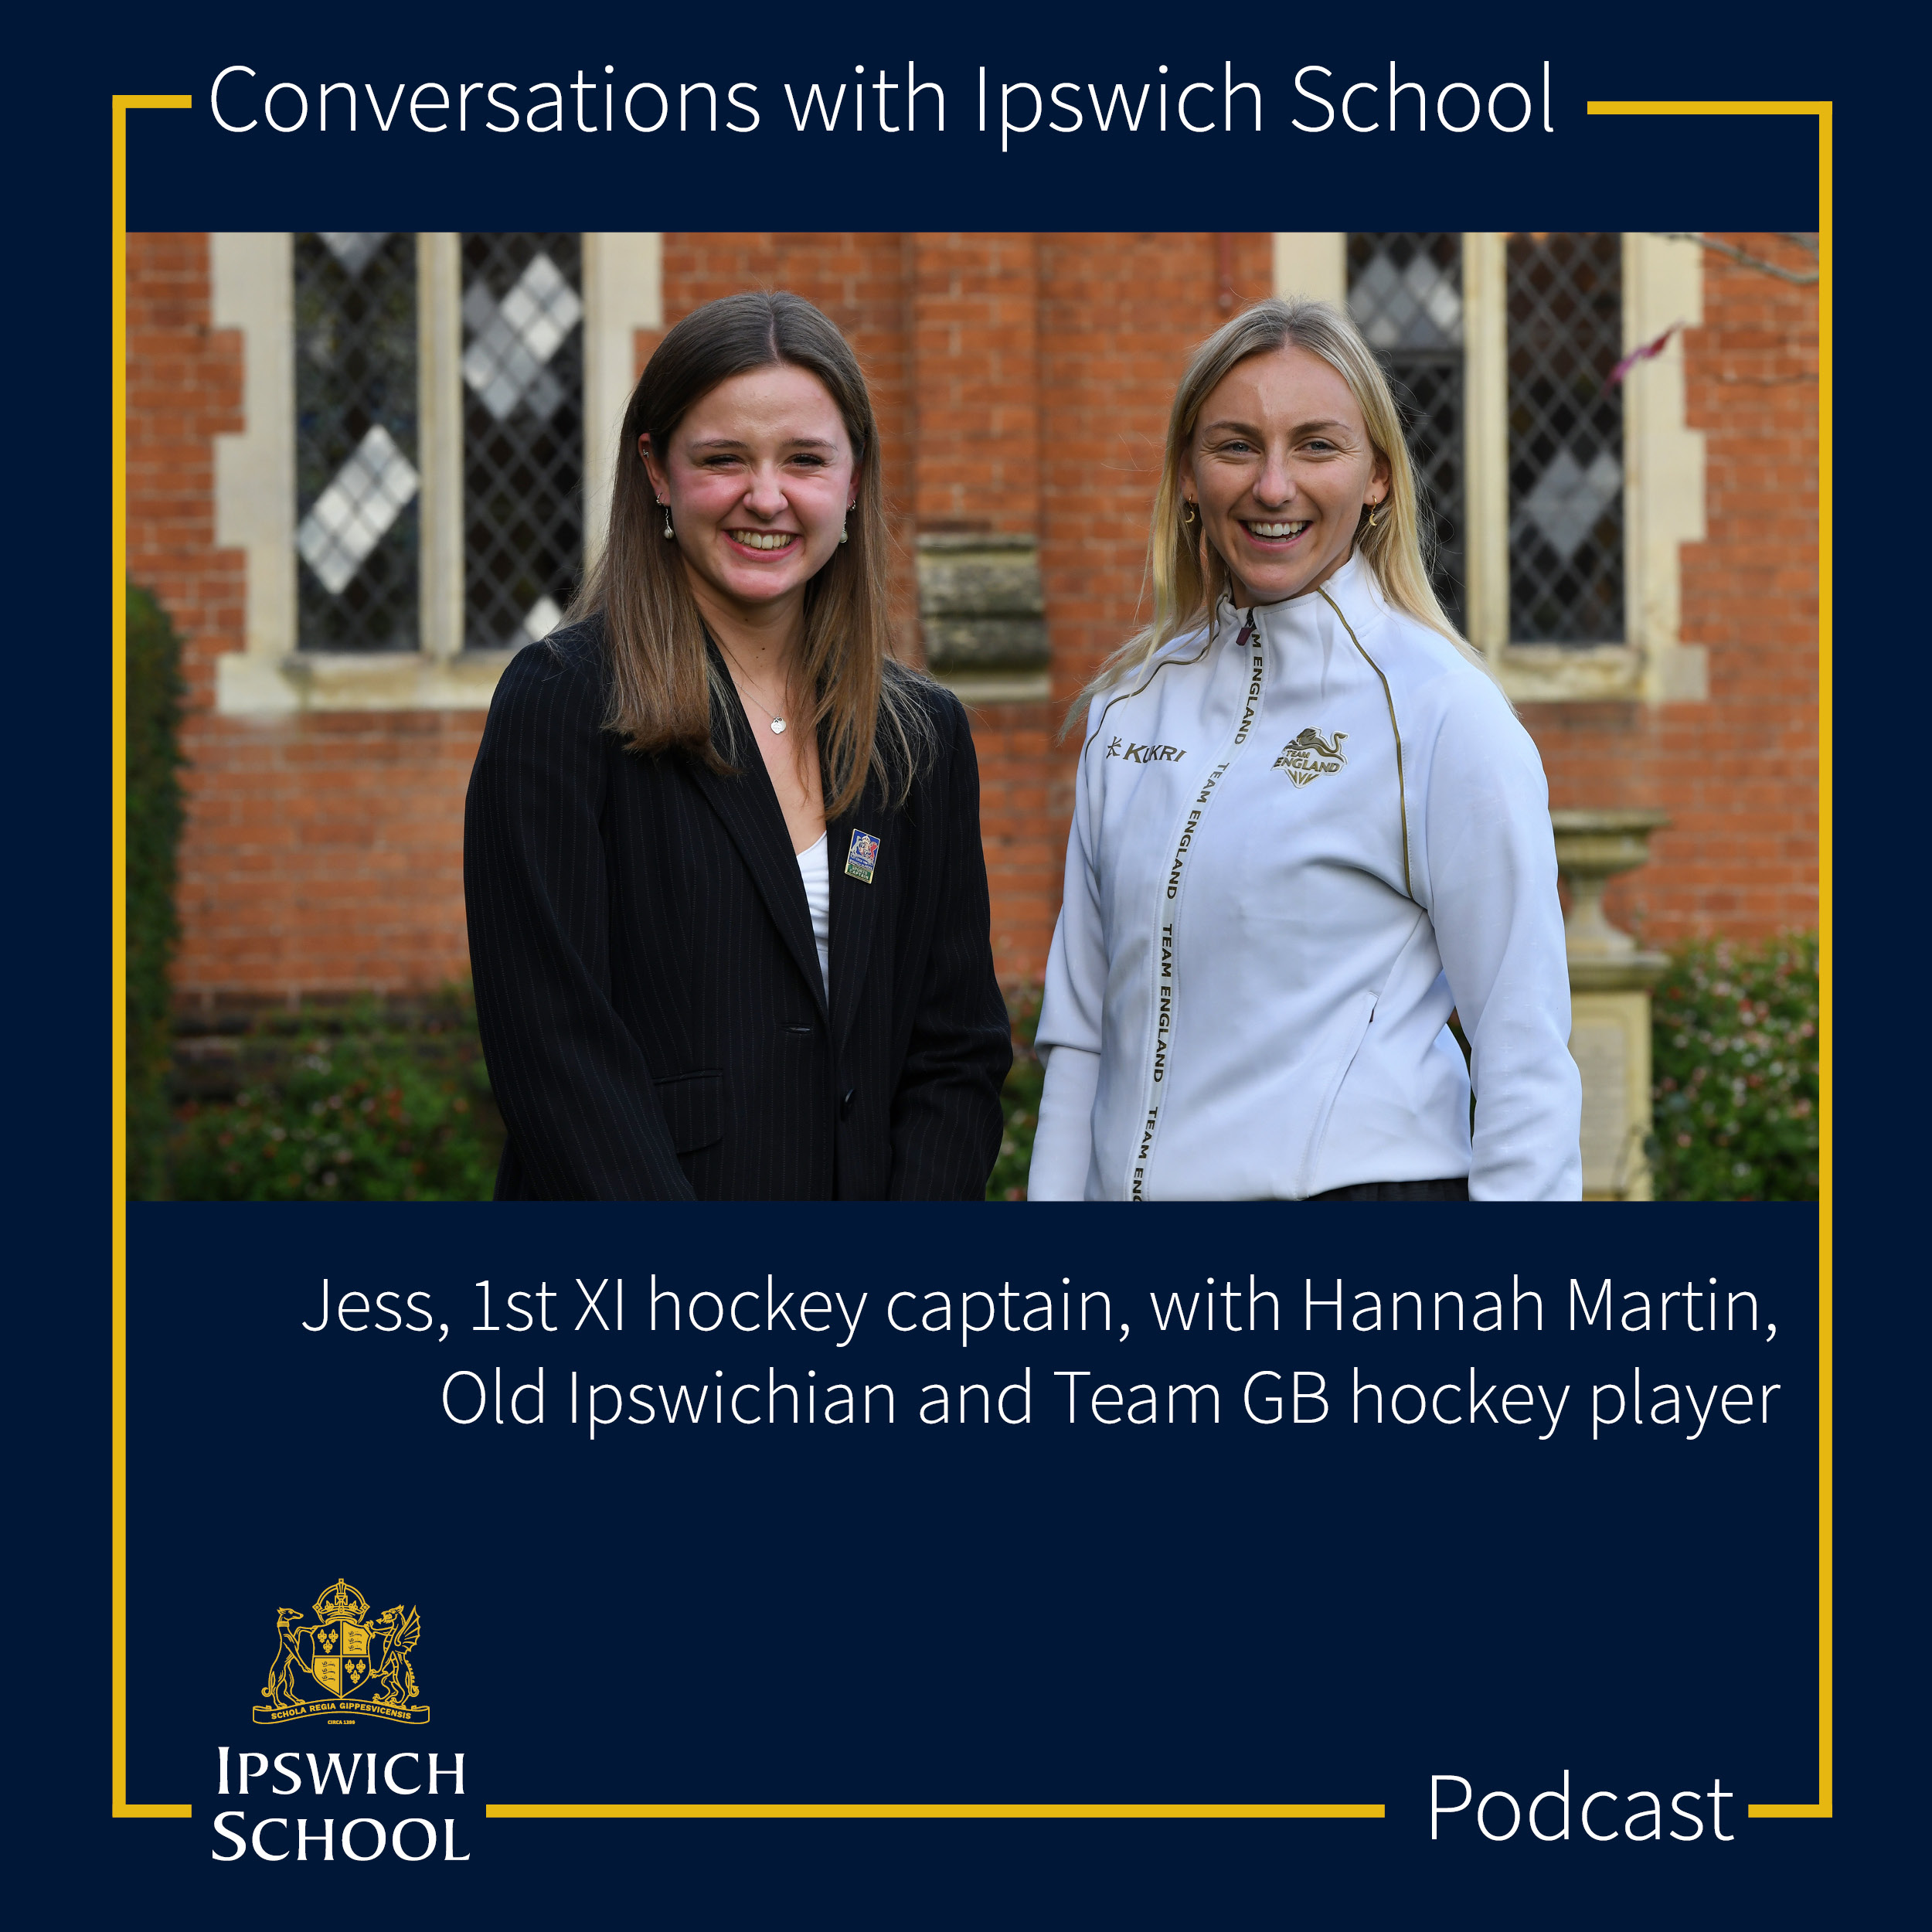 Team GB Hockey with Hannah Martin